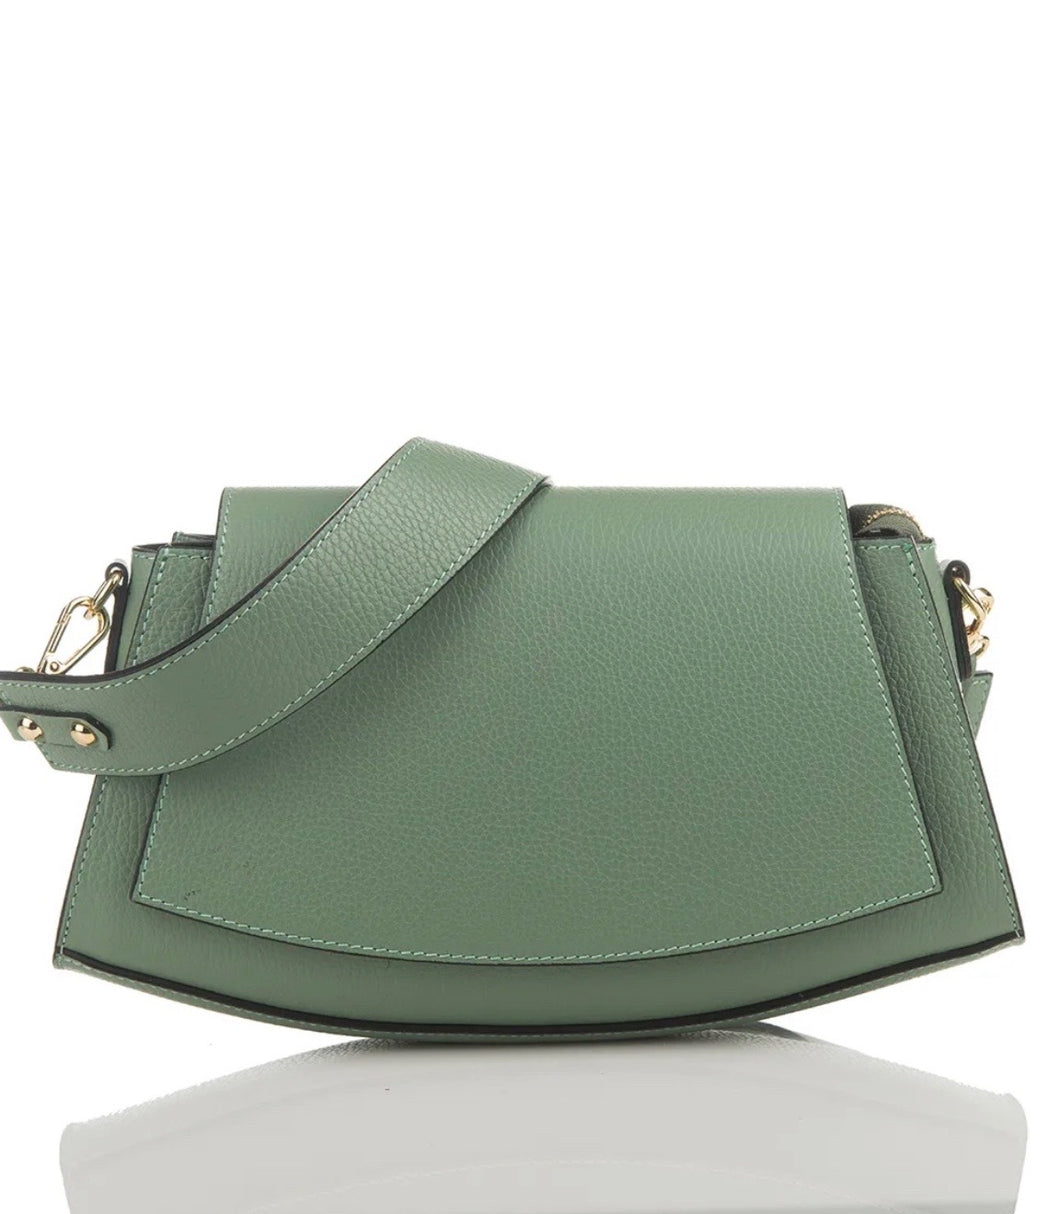 Kaia Mint Green Leather Crossbody Bag